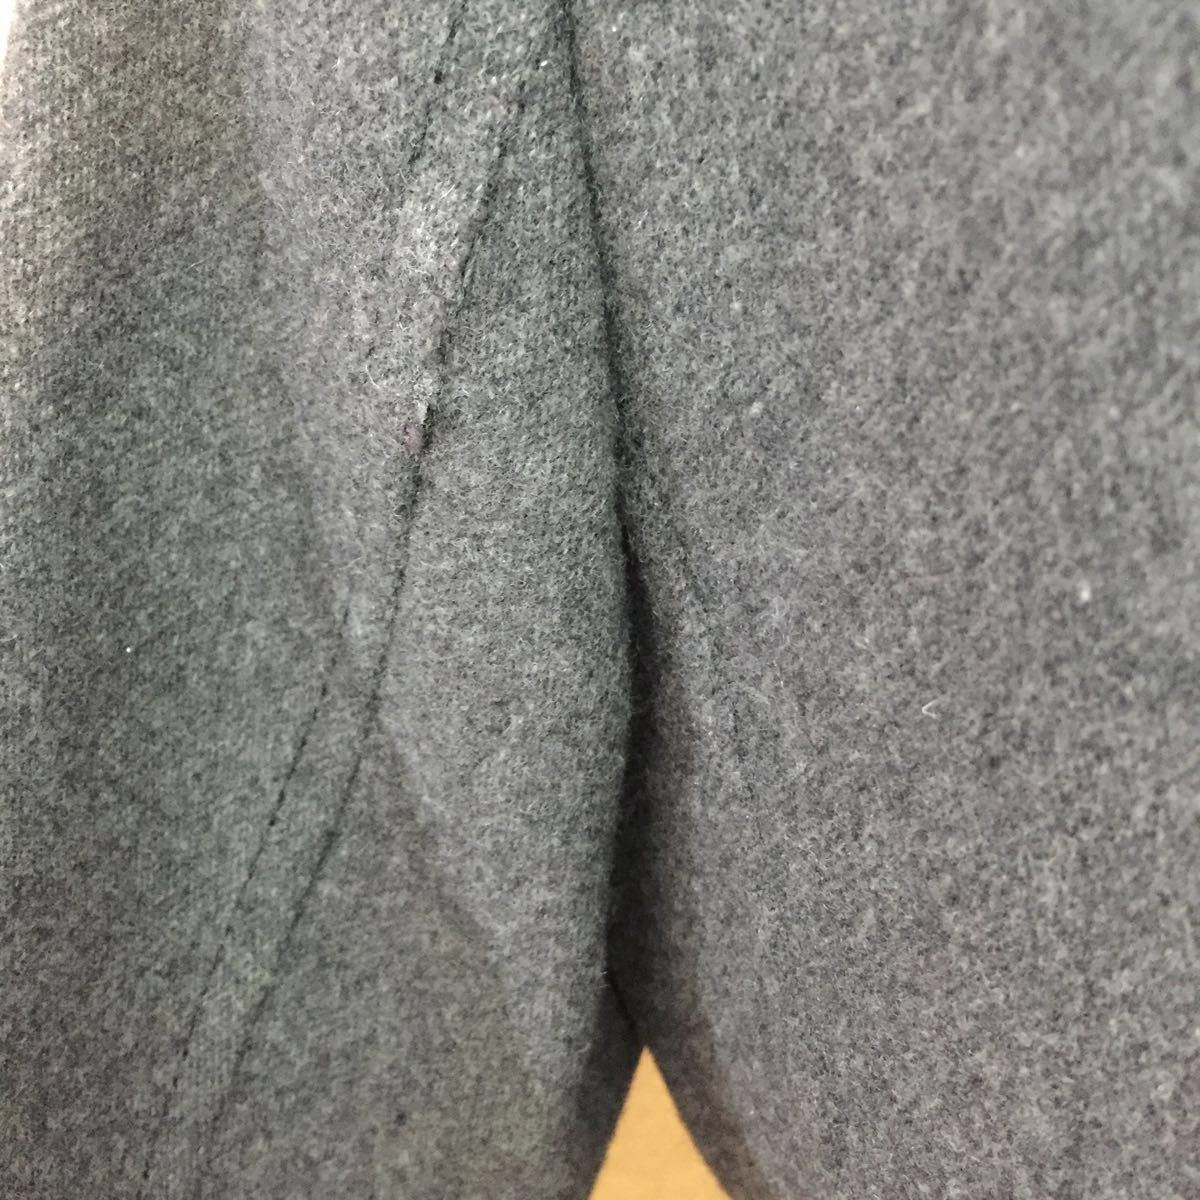  Michael Kors MICHAEL KORS пальто серый размер 4 шерсть женский 